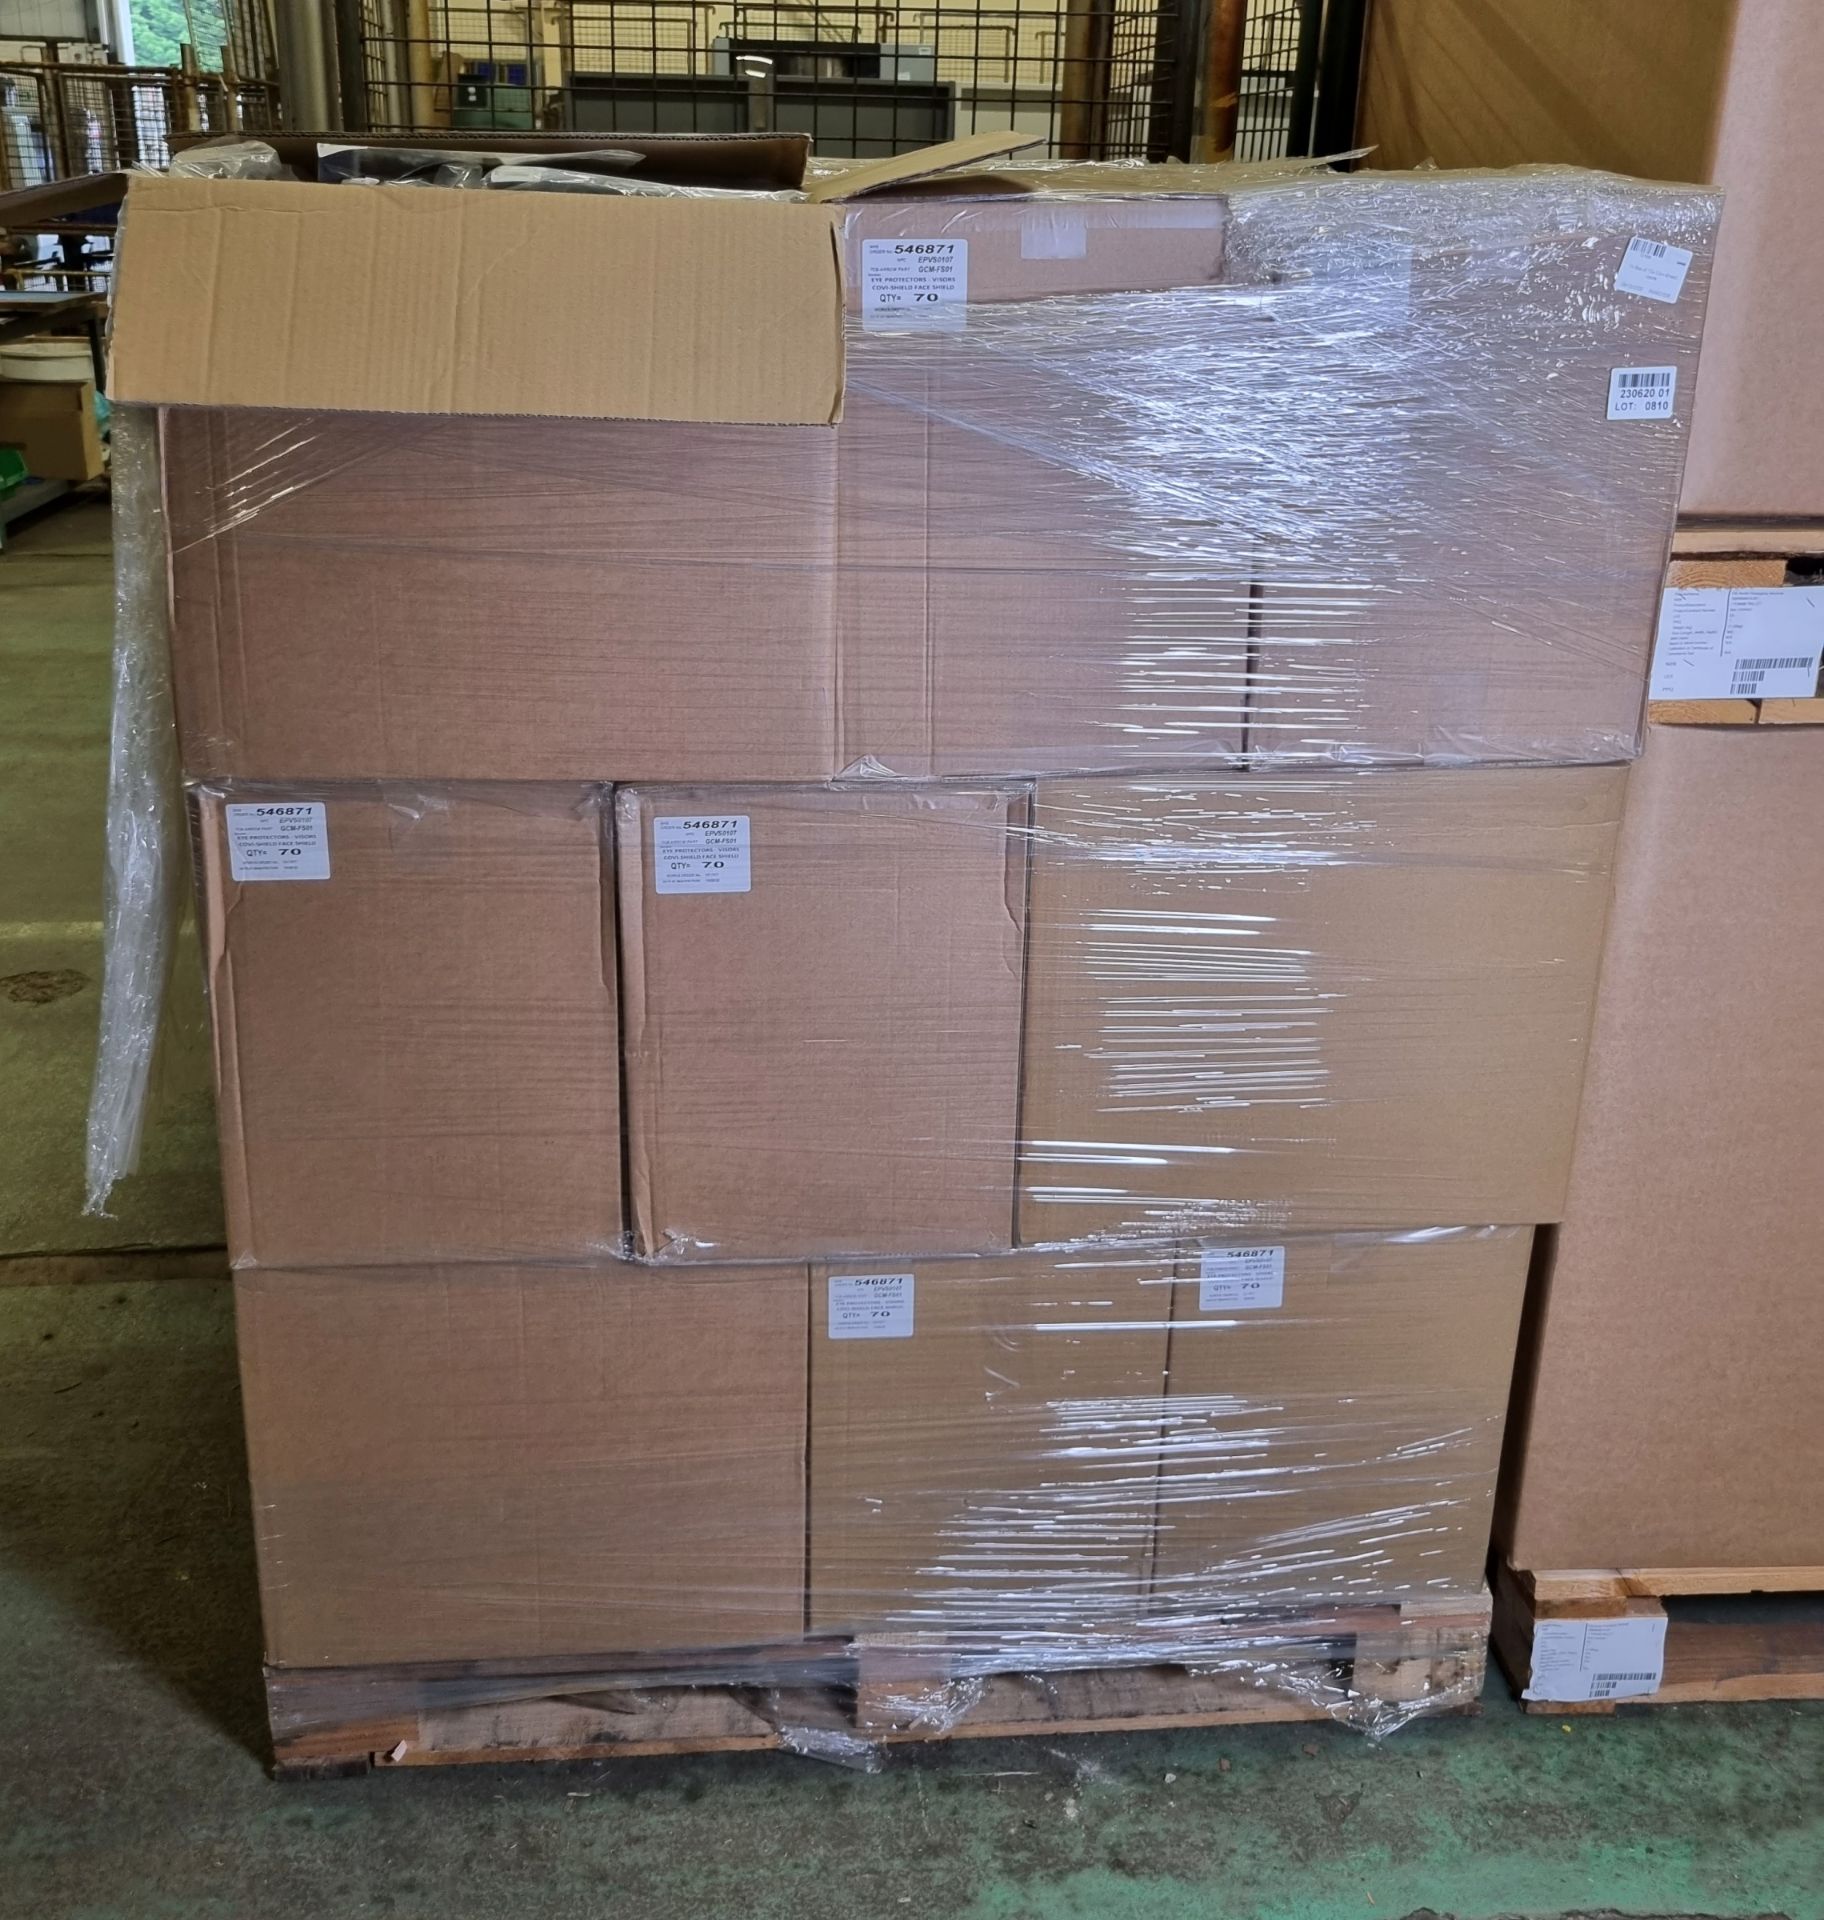 21x boxes of Covi-Shield visors - 70 units per box - Image 4 of 4